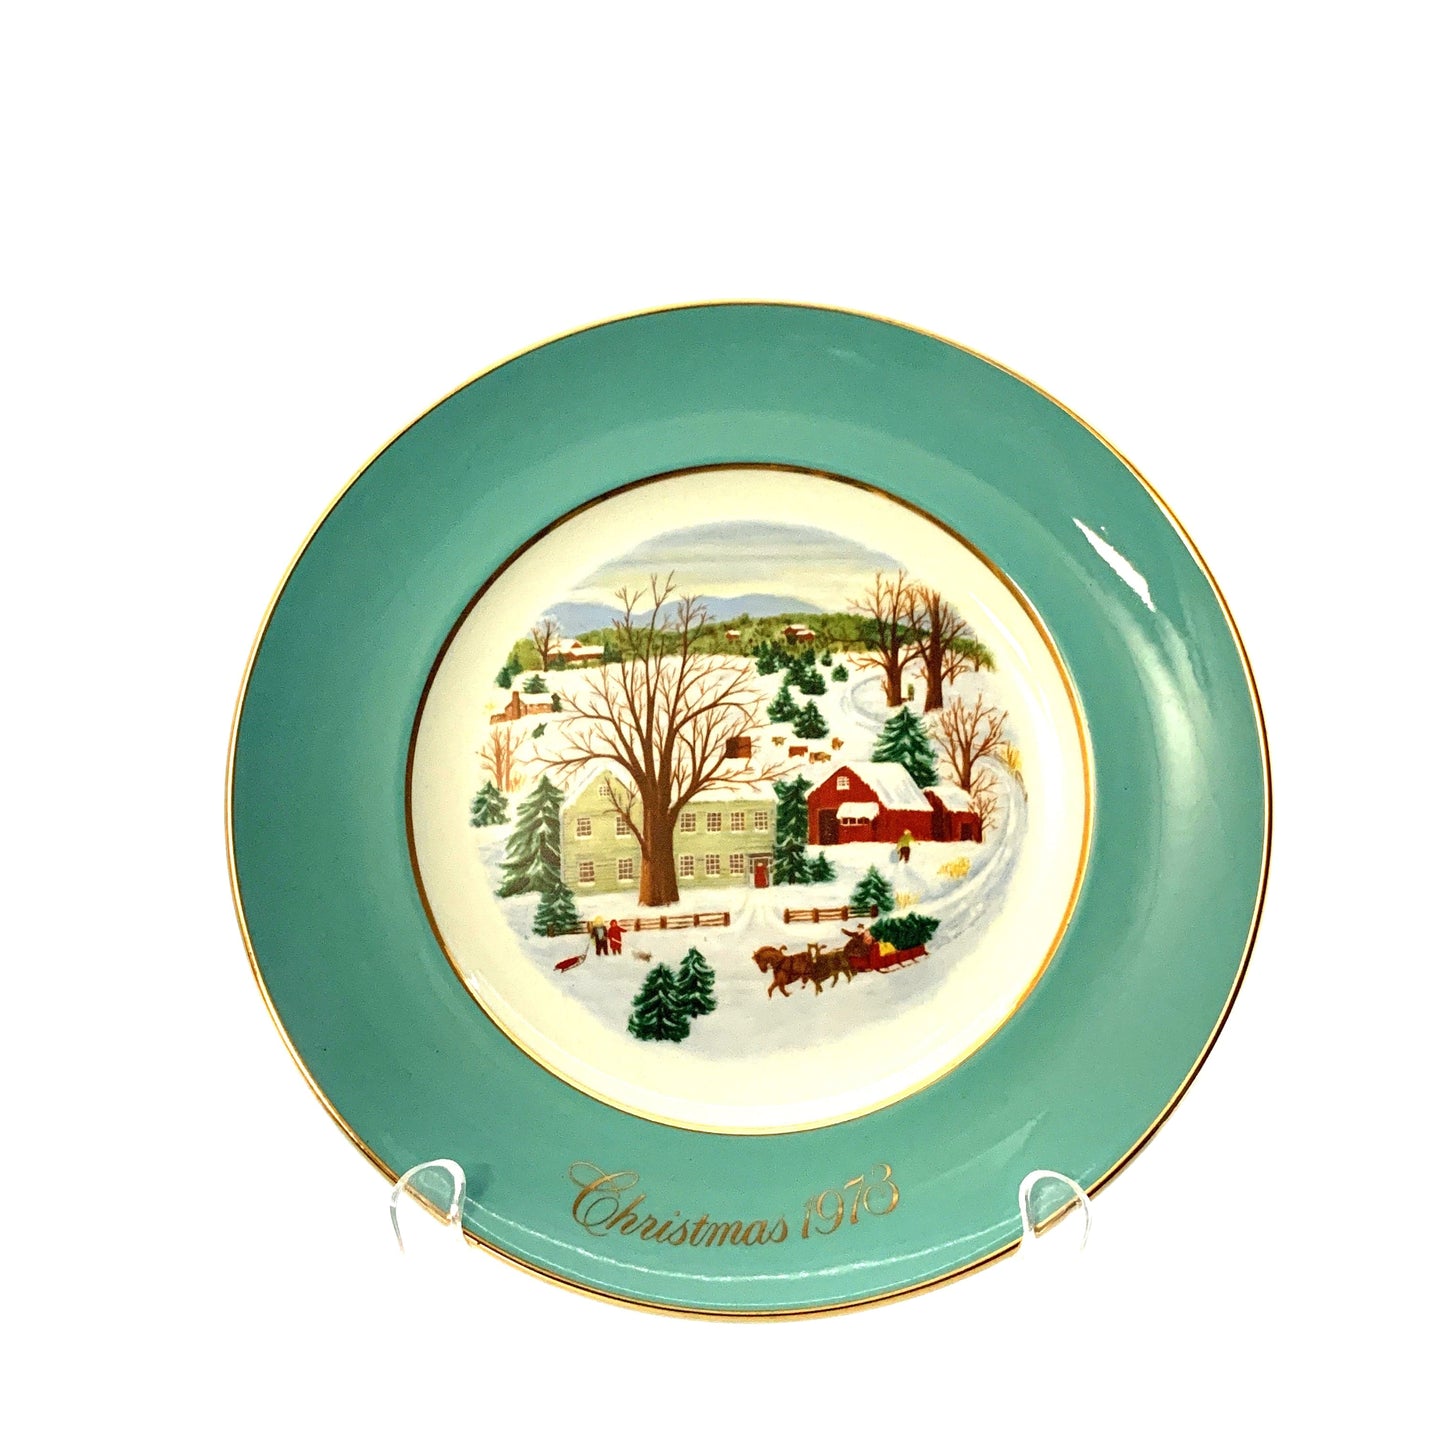 Vintage Avon Christmas Plate Series First Edition “Christmas On The Farm” 1973